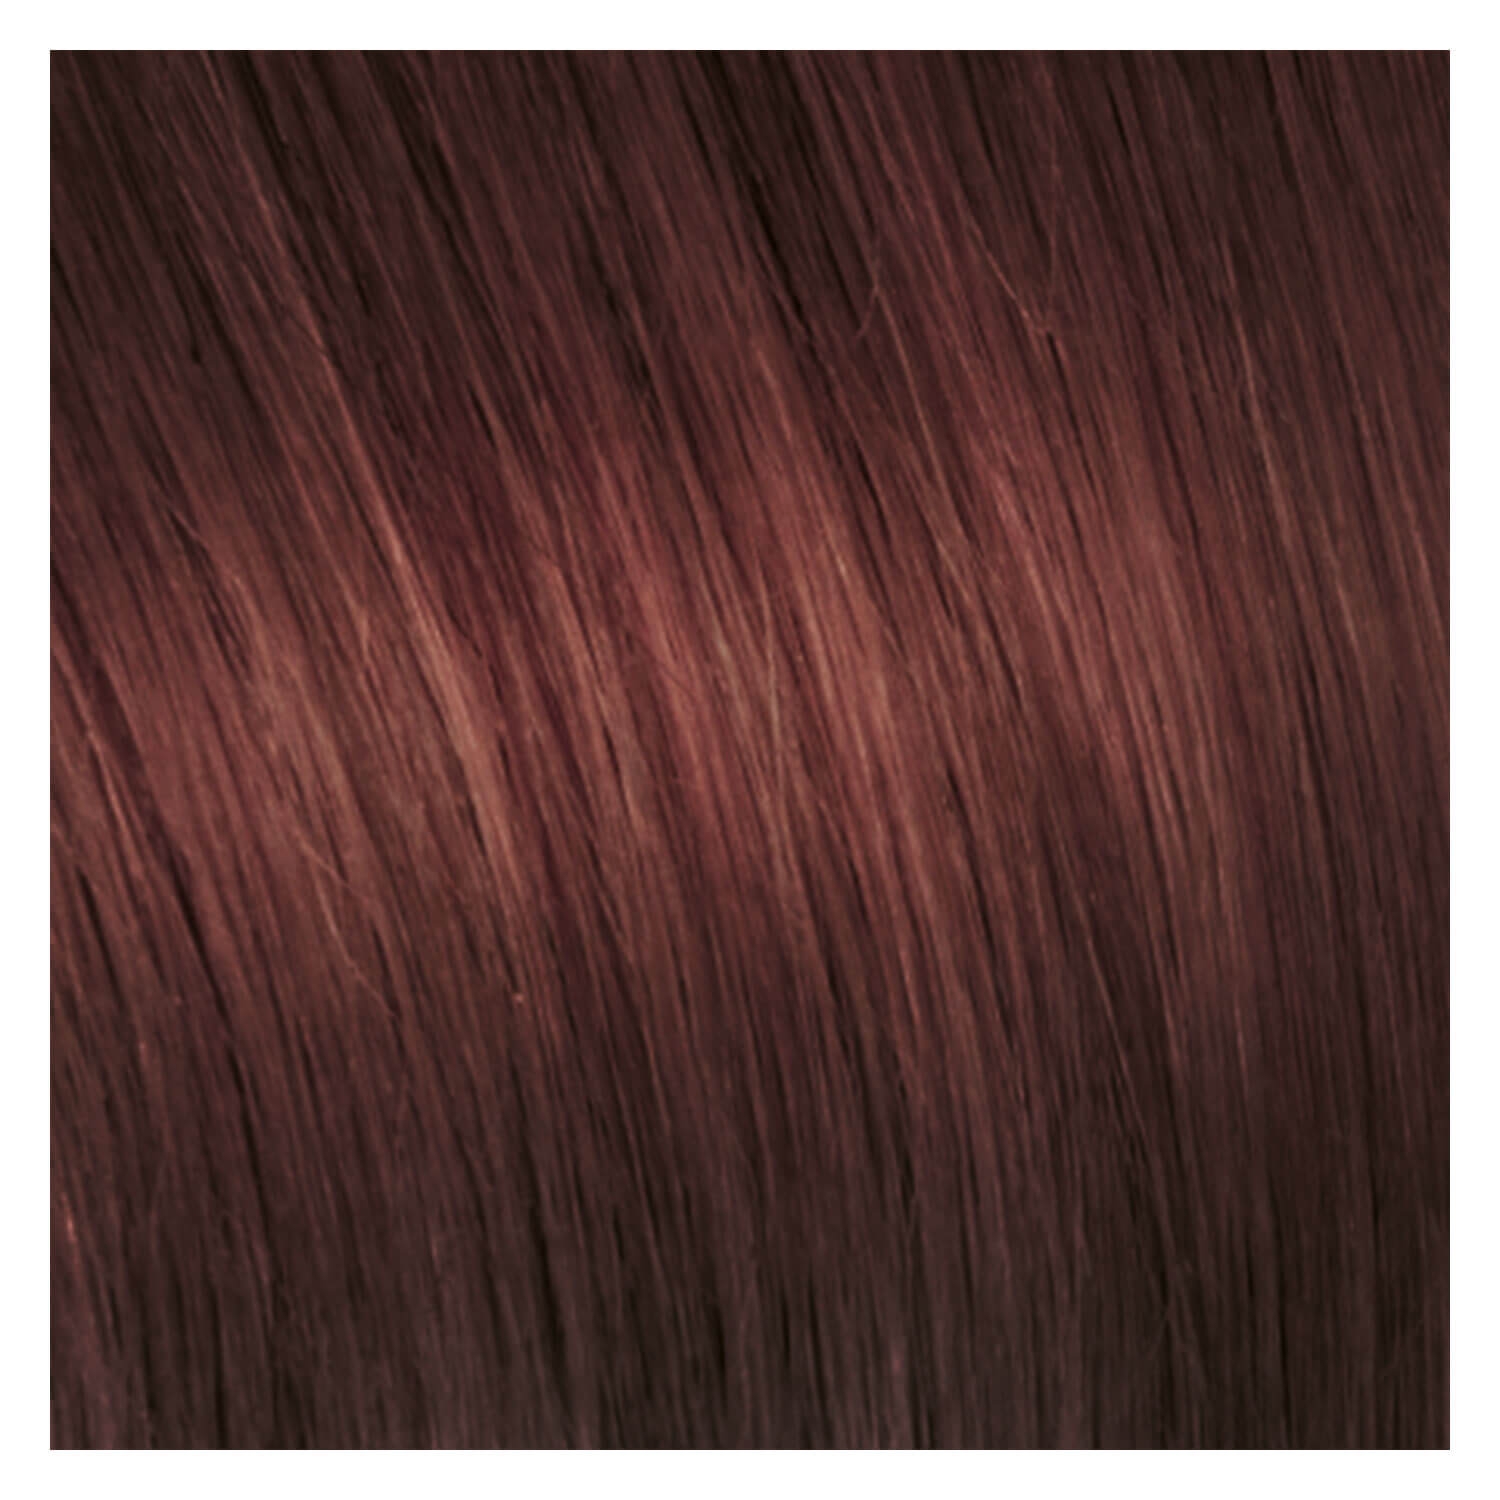 Produktbild von SHE Bonding-System Hair Extensions Wavy - 32 Mahagoni Kastanienbraun 55/60cm